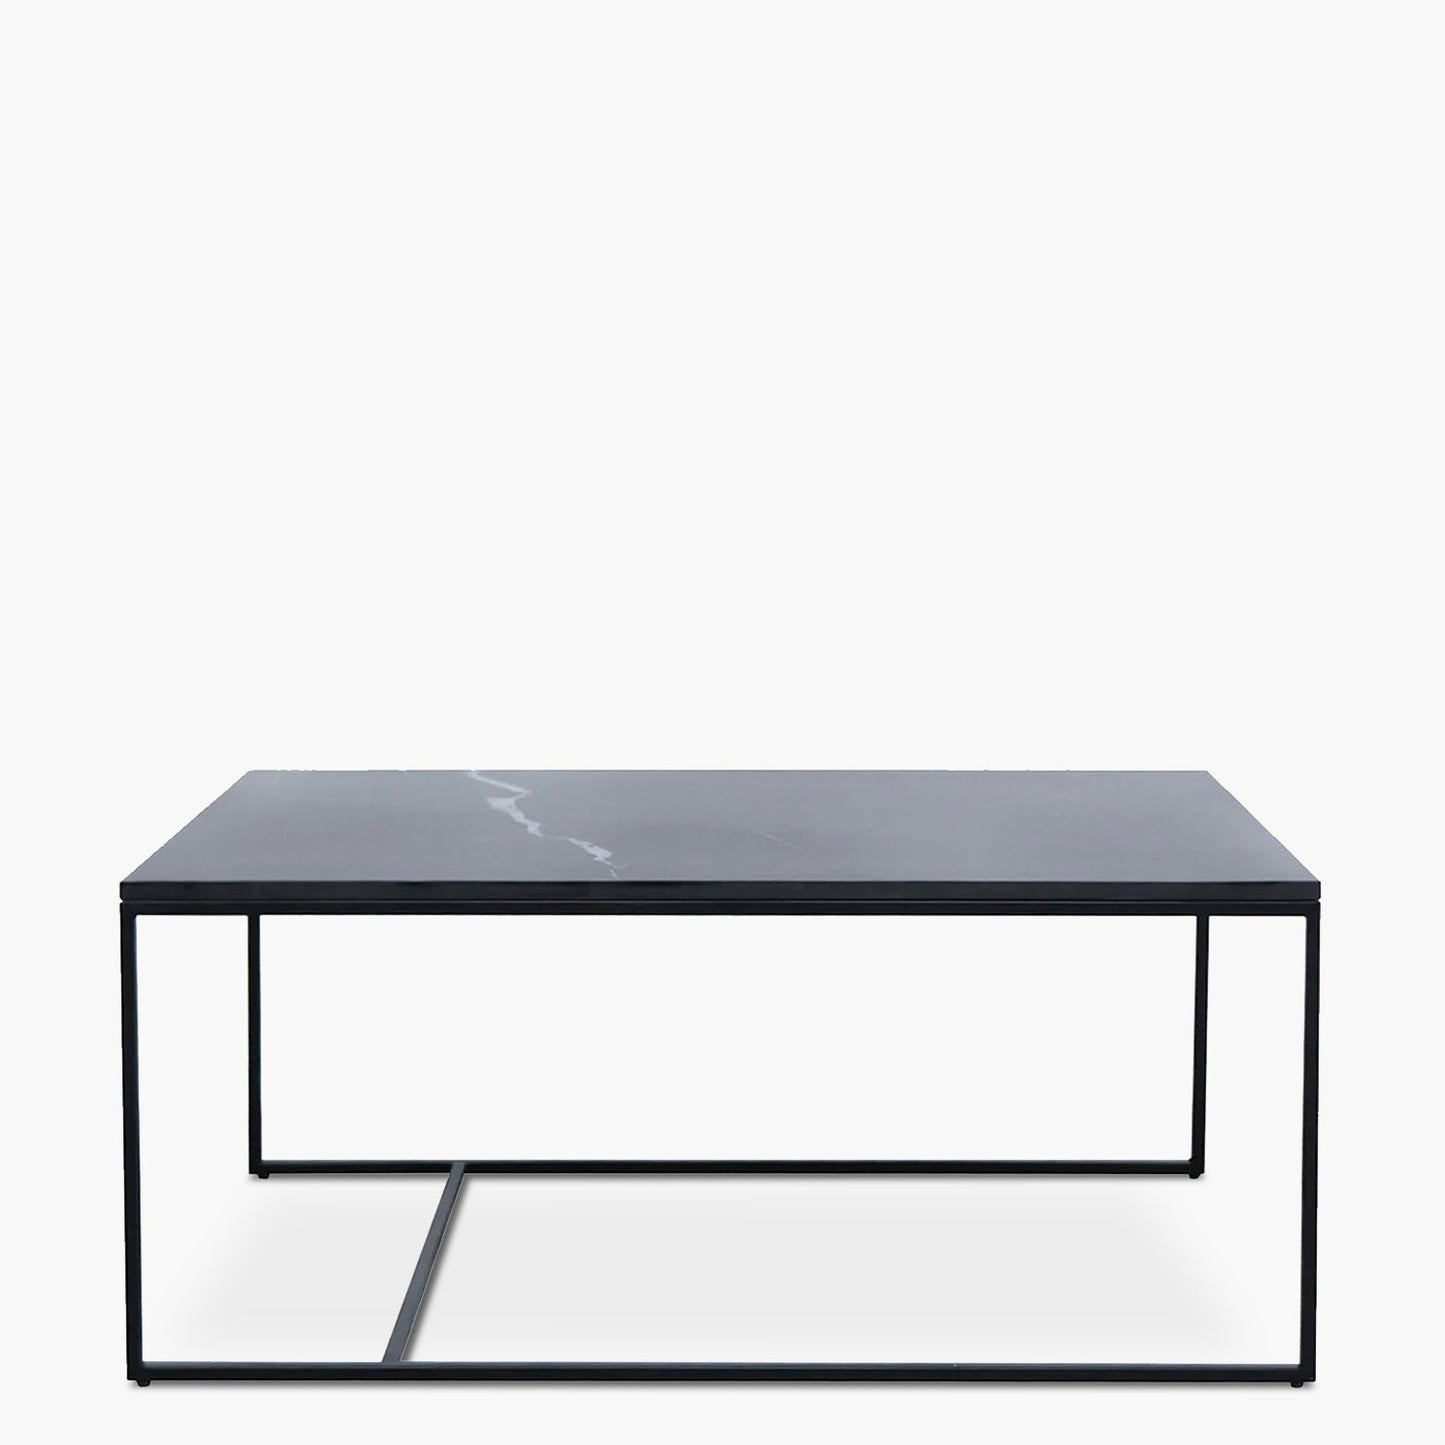 mesa-de-centro-alonza-tipo-marmol-90-negro